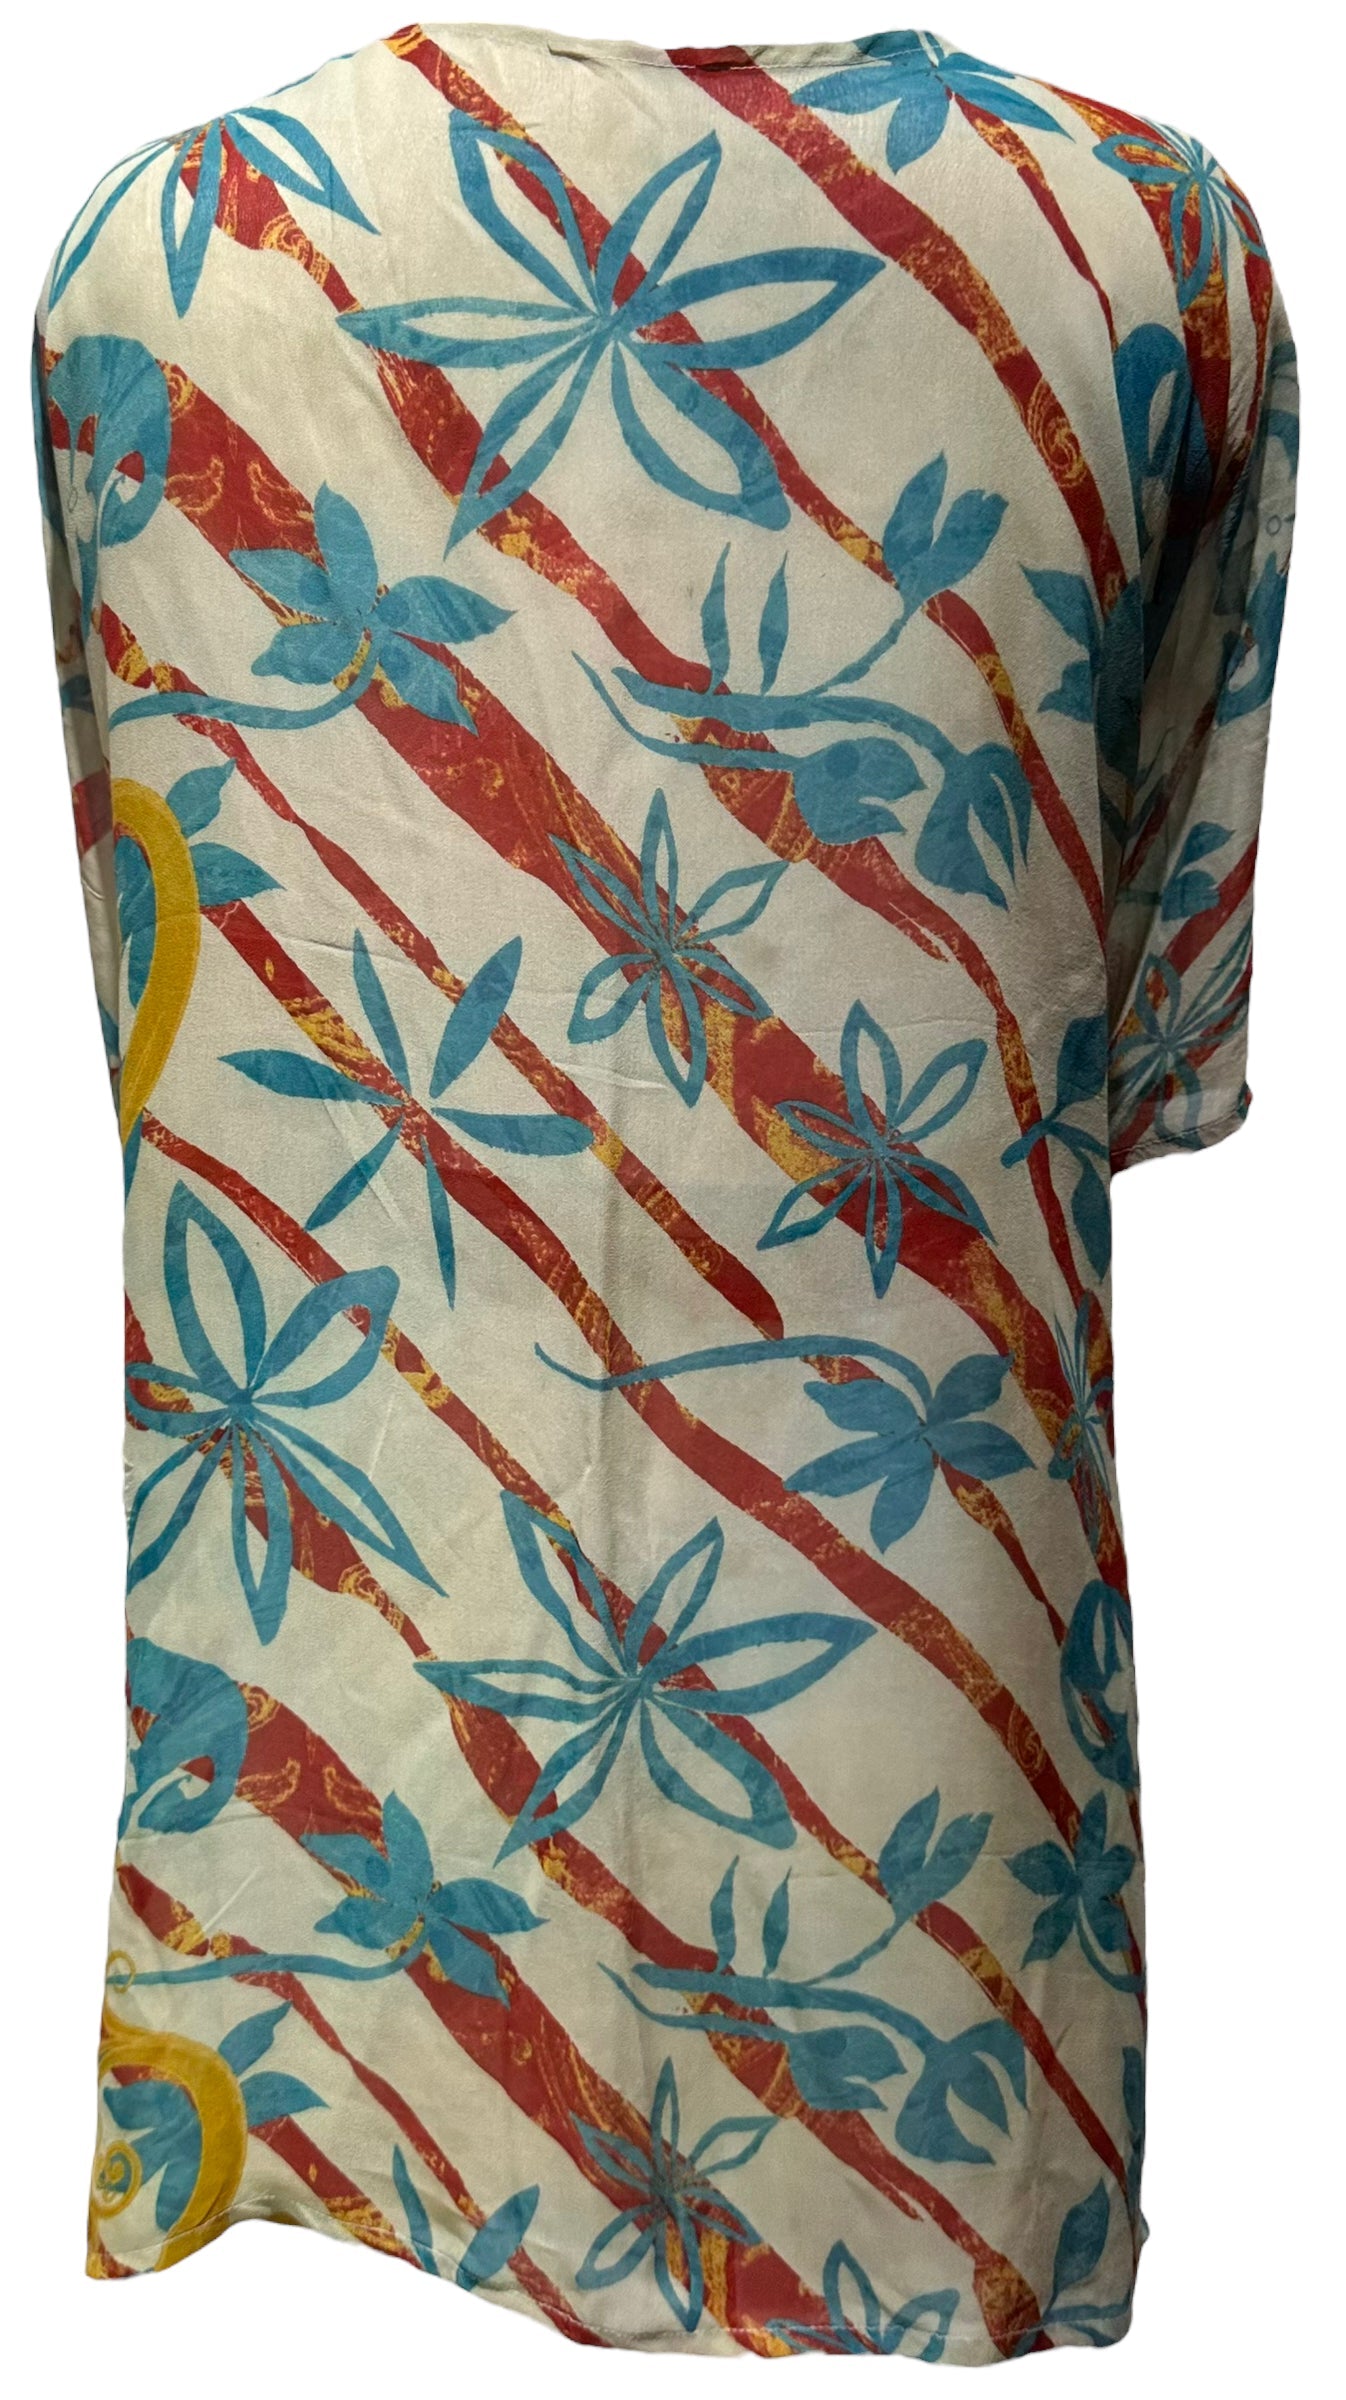 PRG3113 Ana Mendieta Wabi Sabi Sheer Pure Silk Kimono-Sleeved Jacket with Belt